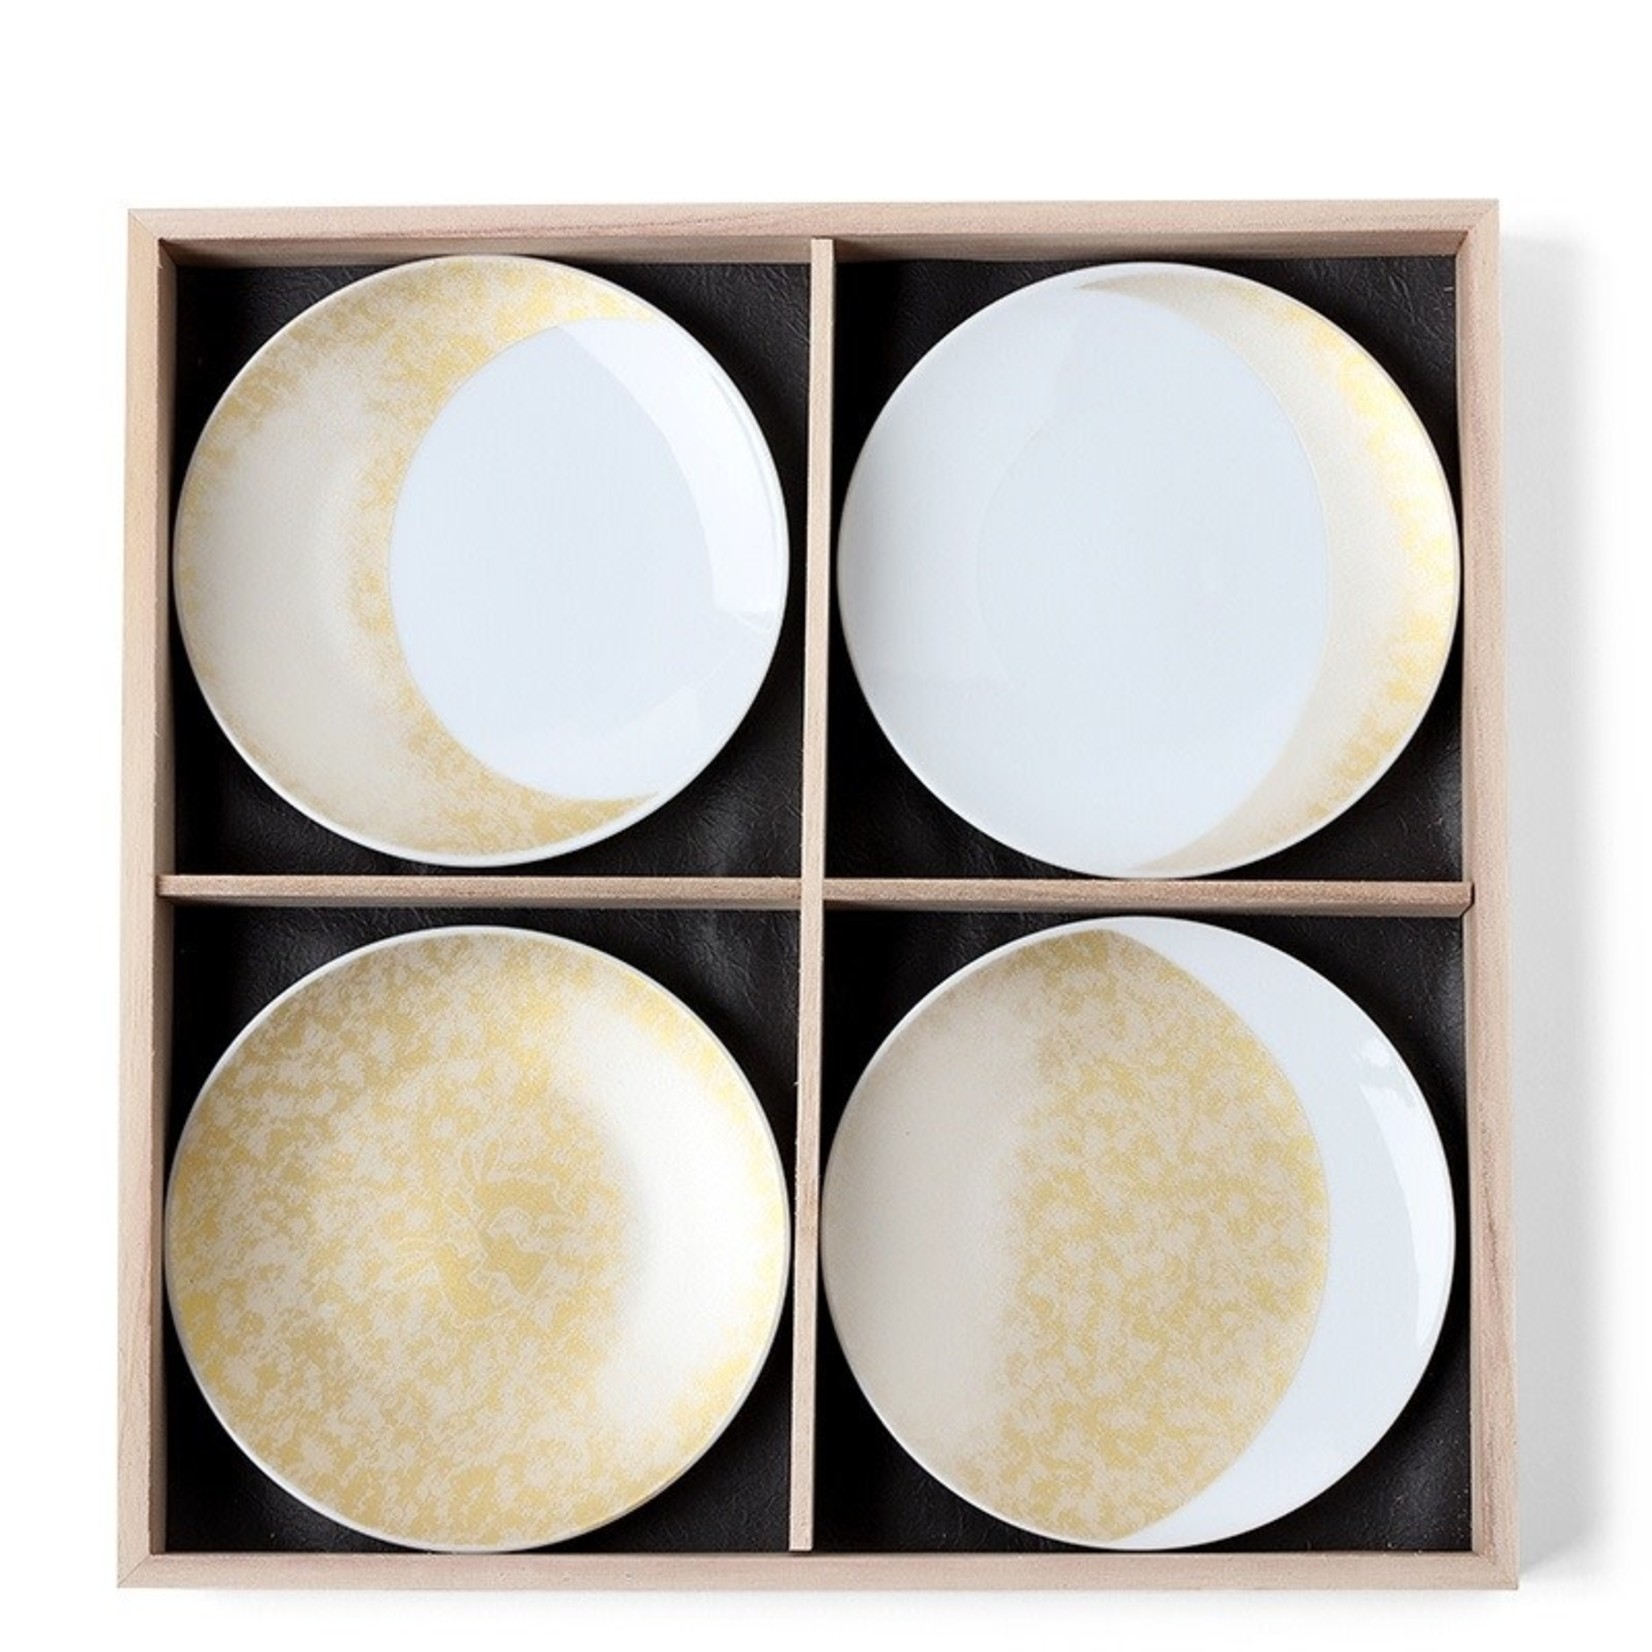 Plate - Set of 4 Gold Moon / Rabbit 4.75" - 05581